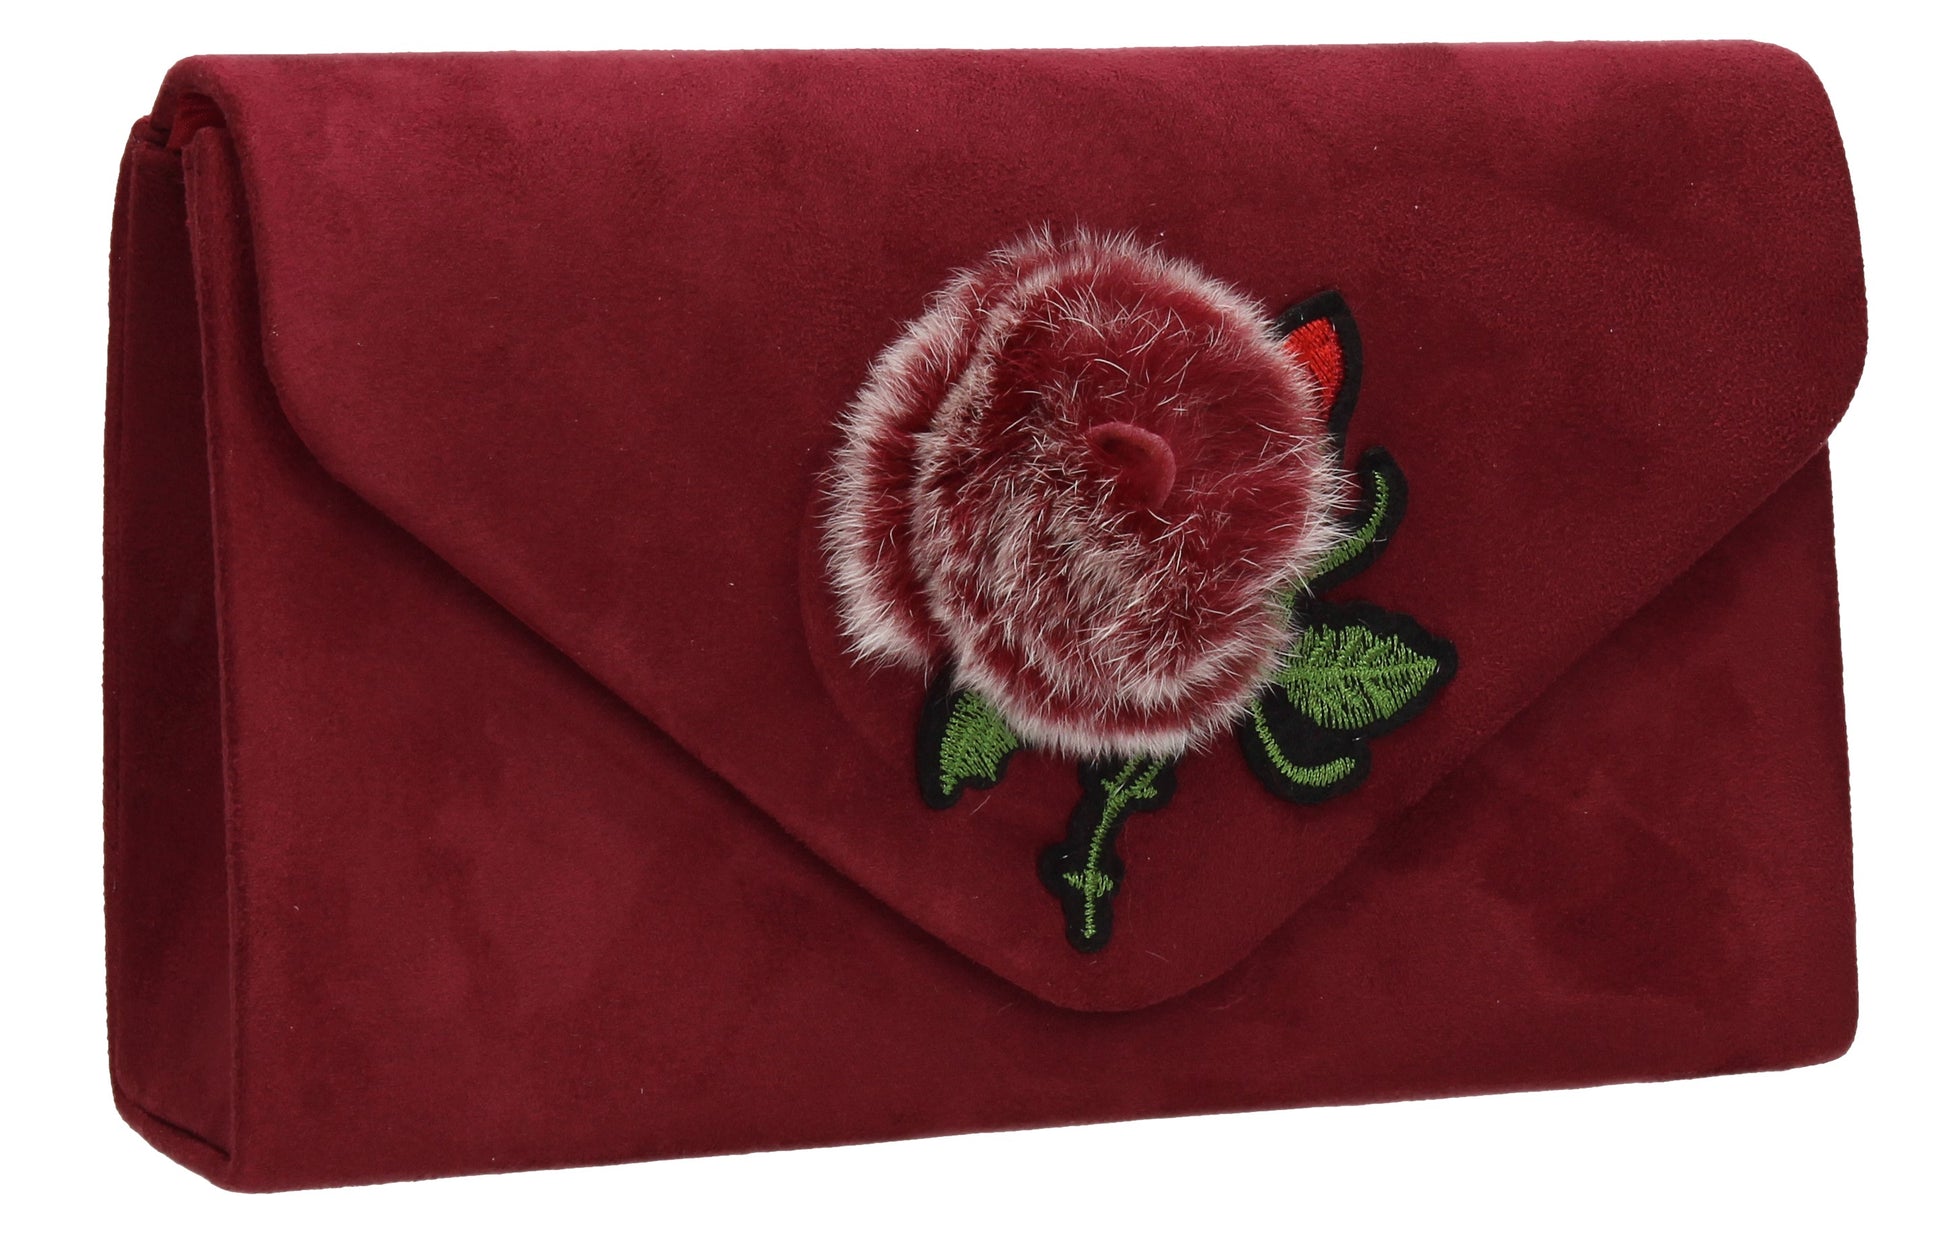 SWANKYSWANS Roxanne Fur Rose Clutch Bag Burgundy Cute Cheap Clutch Bag For Weddings School and Work